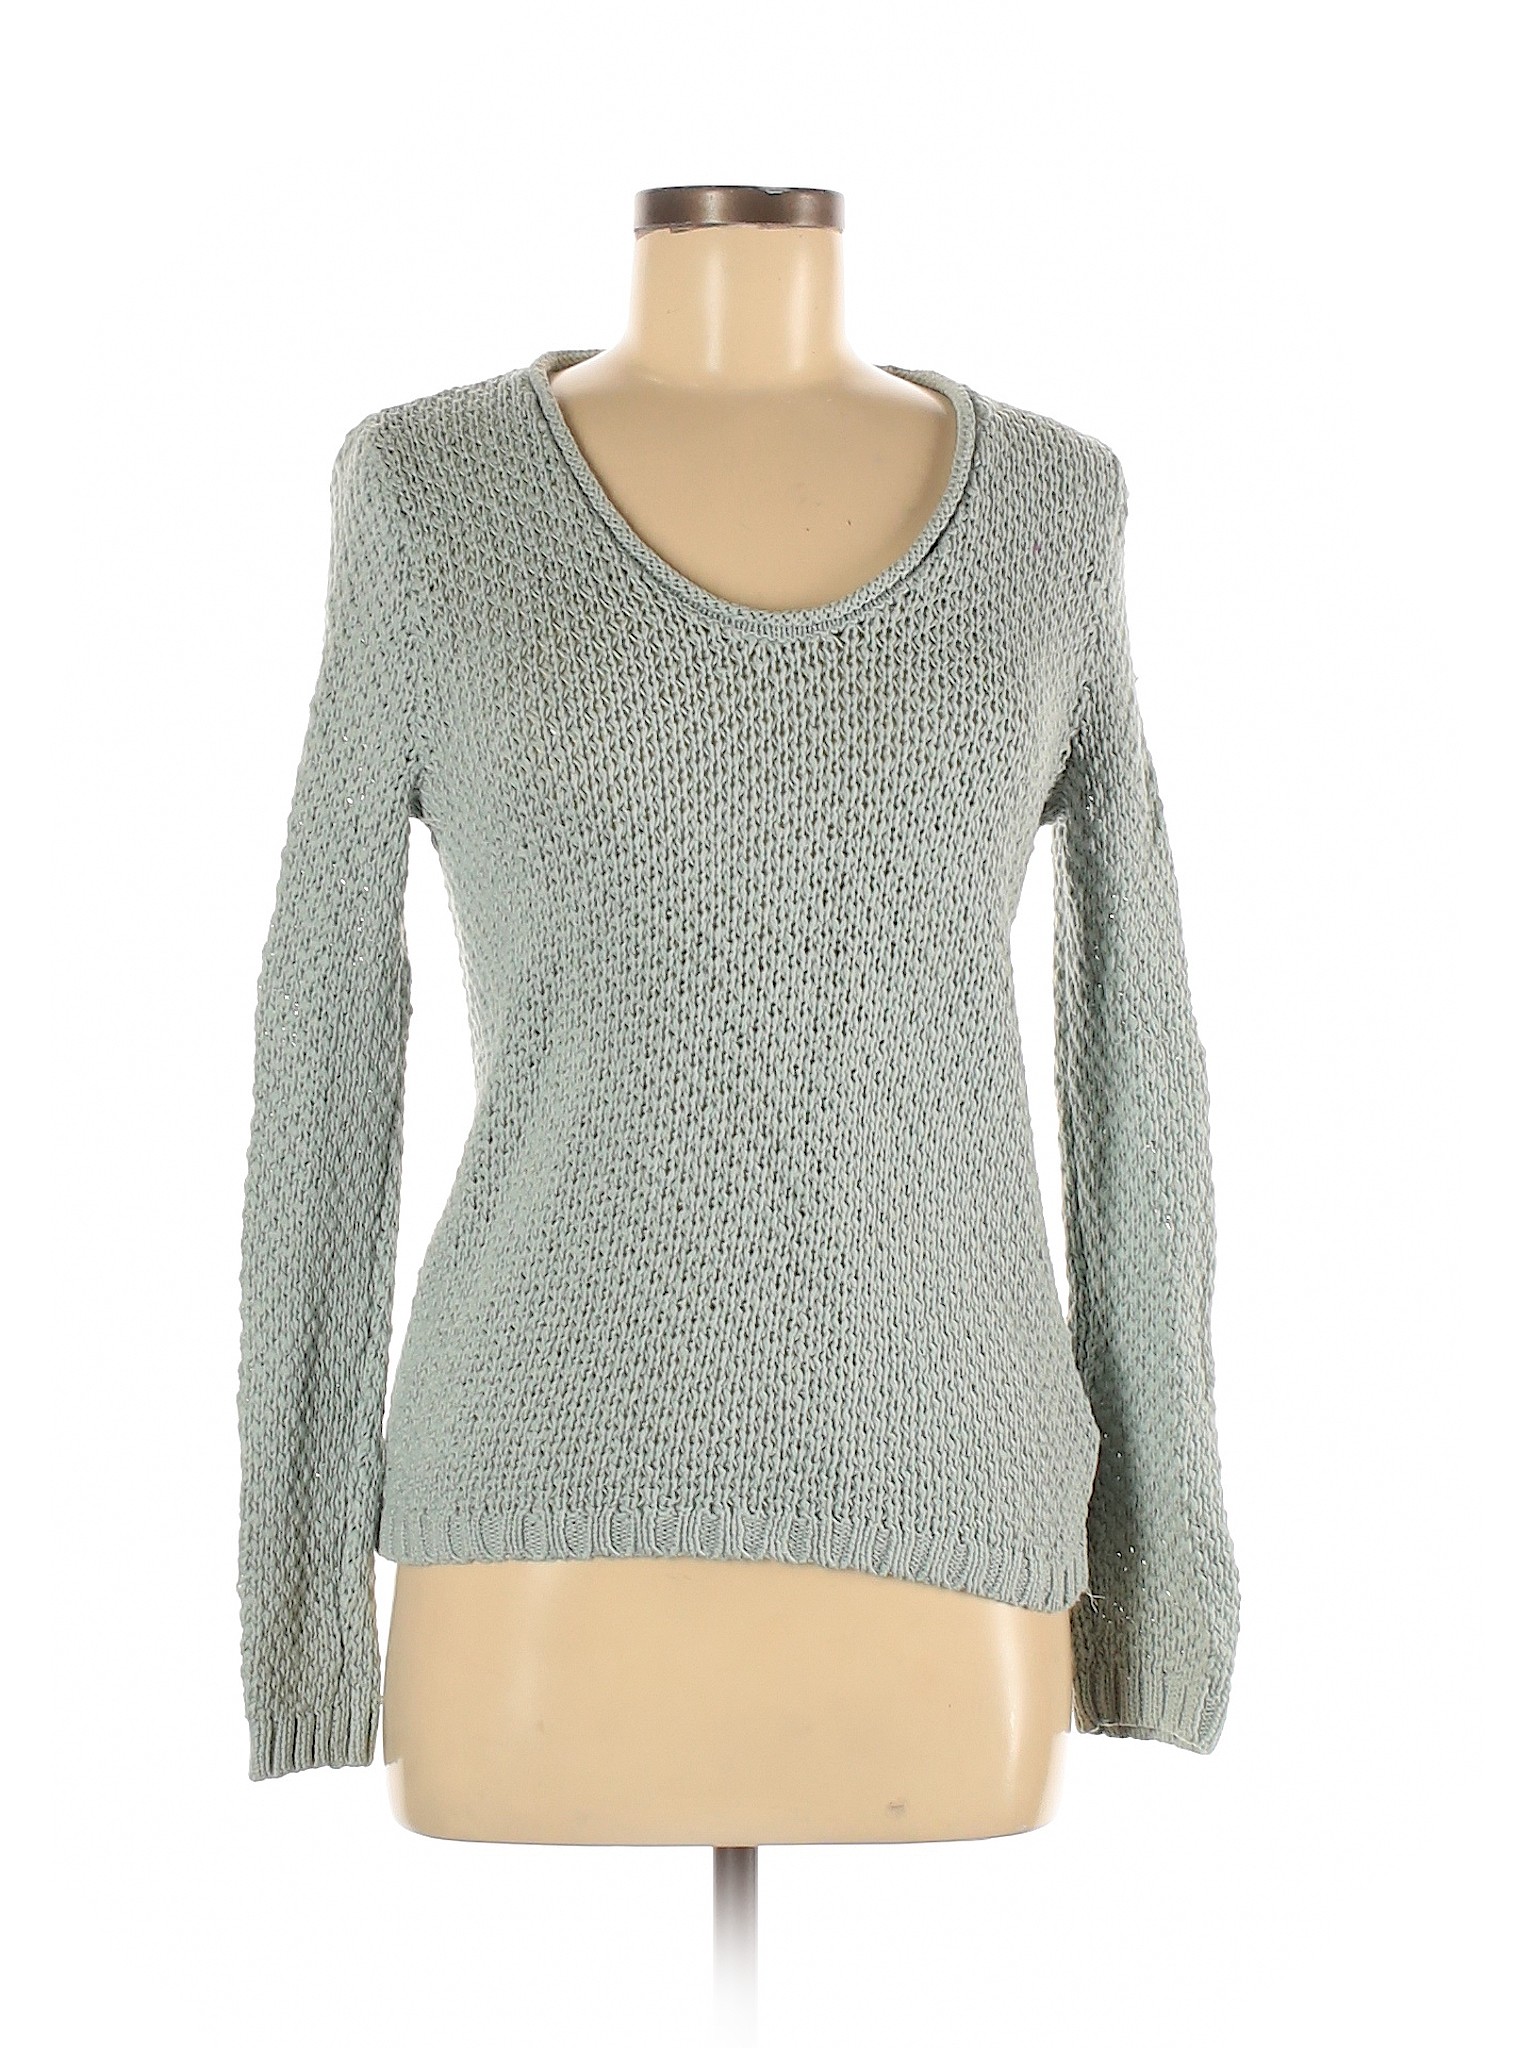 Gap Women Green Pullover Sweater M | eBay